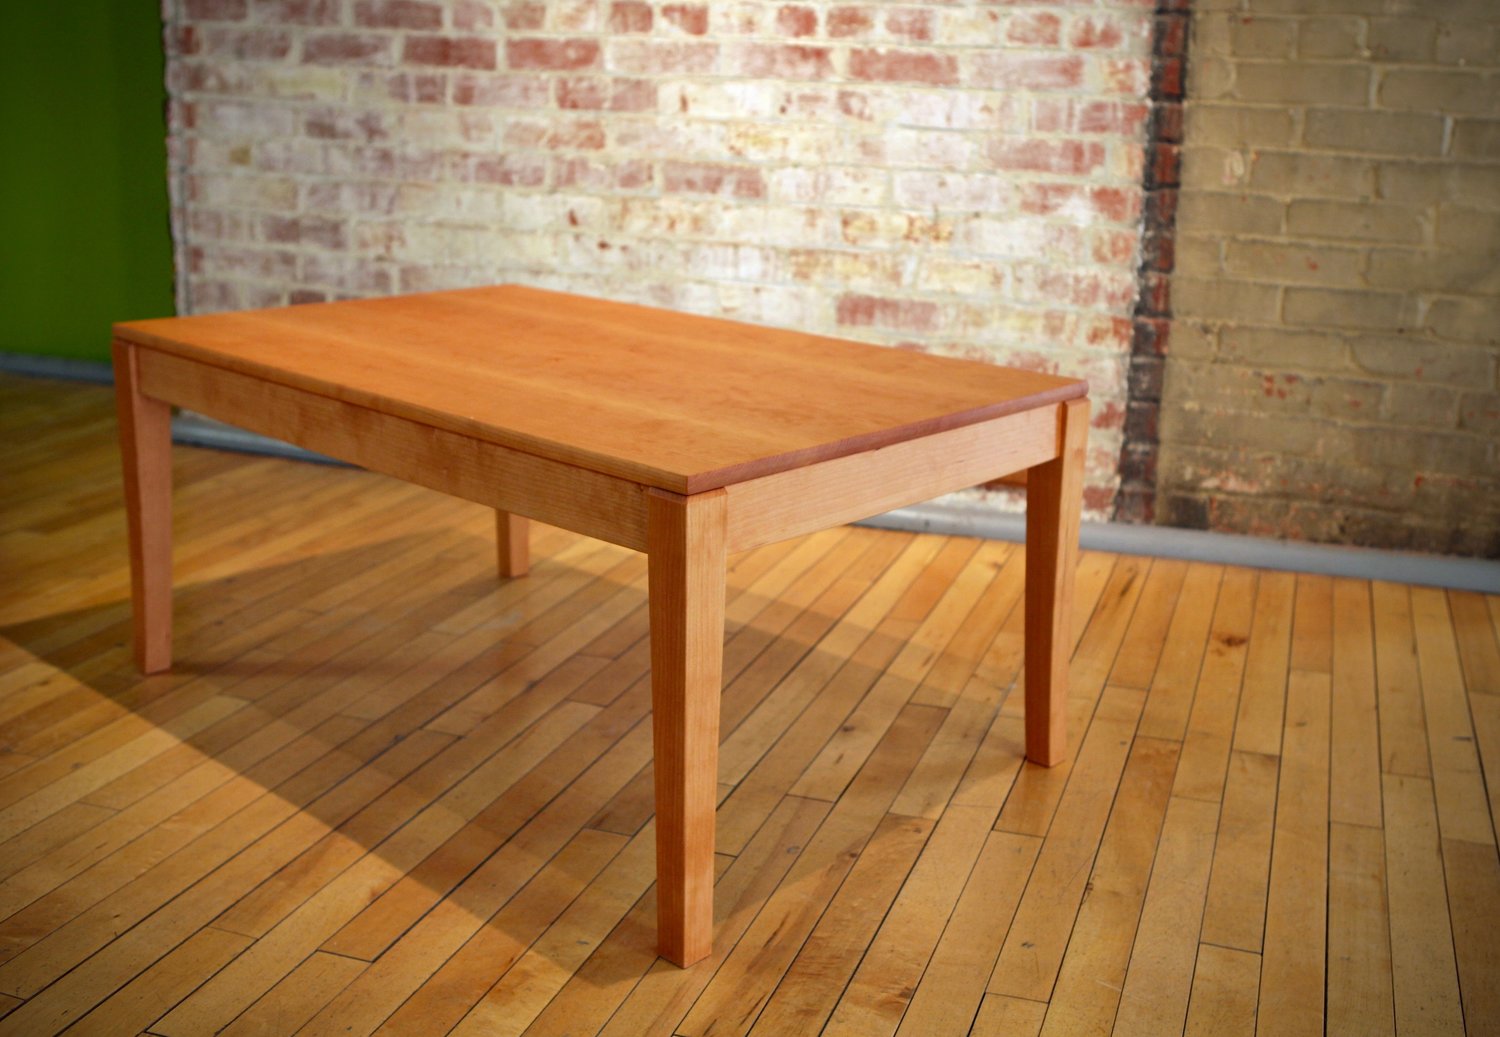 Basic Woodworking Cherry Coffee Table Philadelphia Furniture Workshop